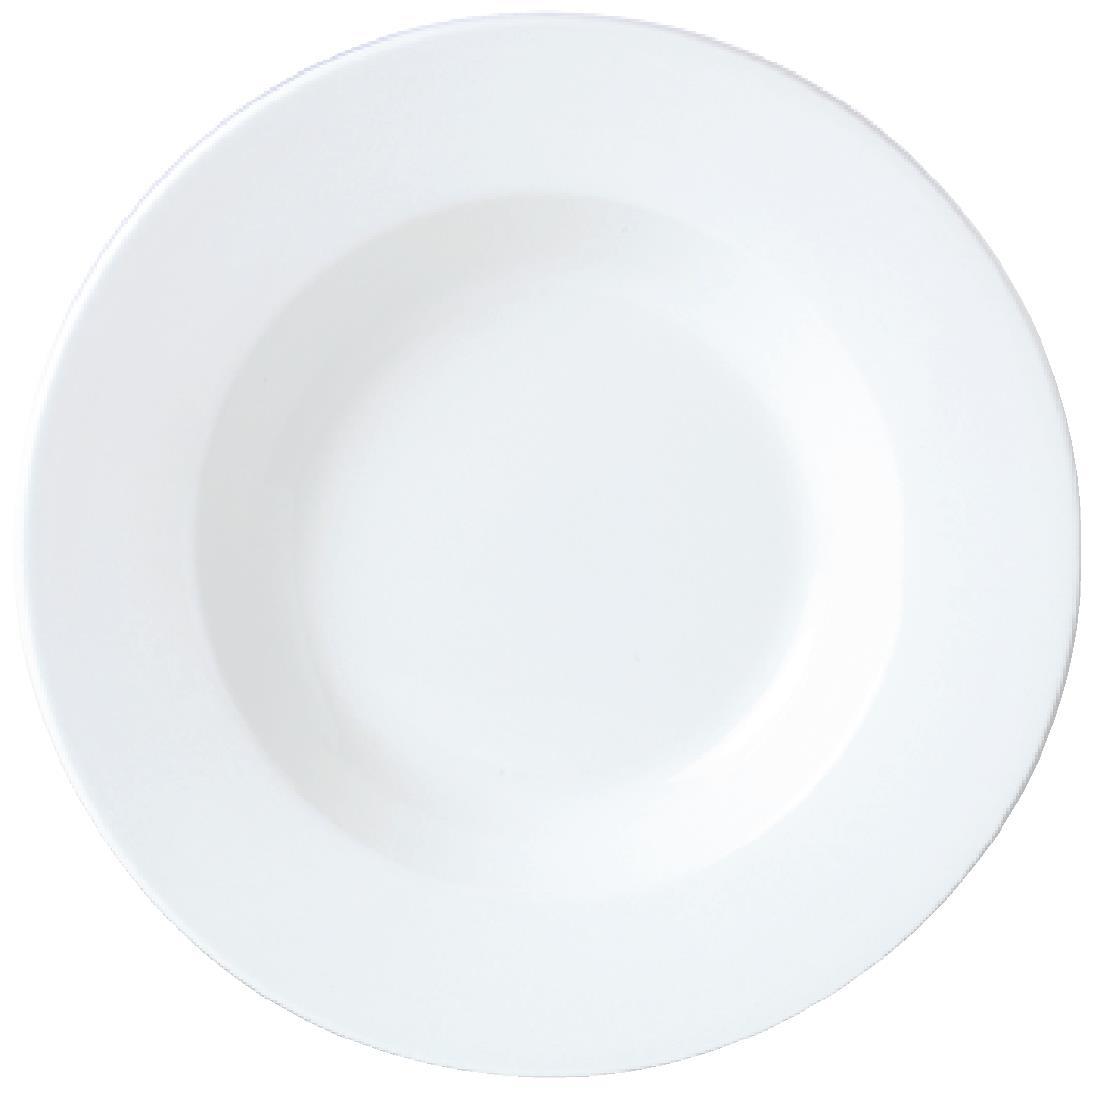 Steelite Simplicity White Pasta Dishes 300mm (Pack of 6) - V0179  - 1